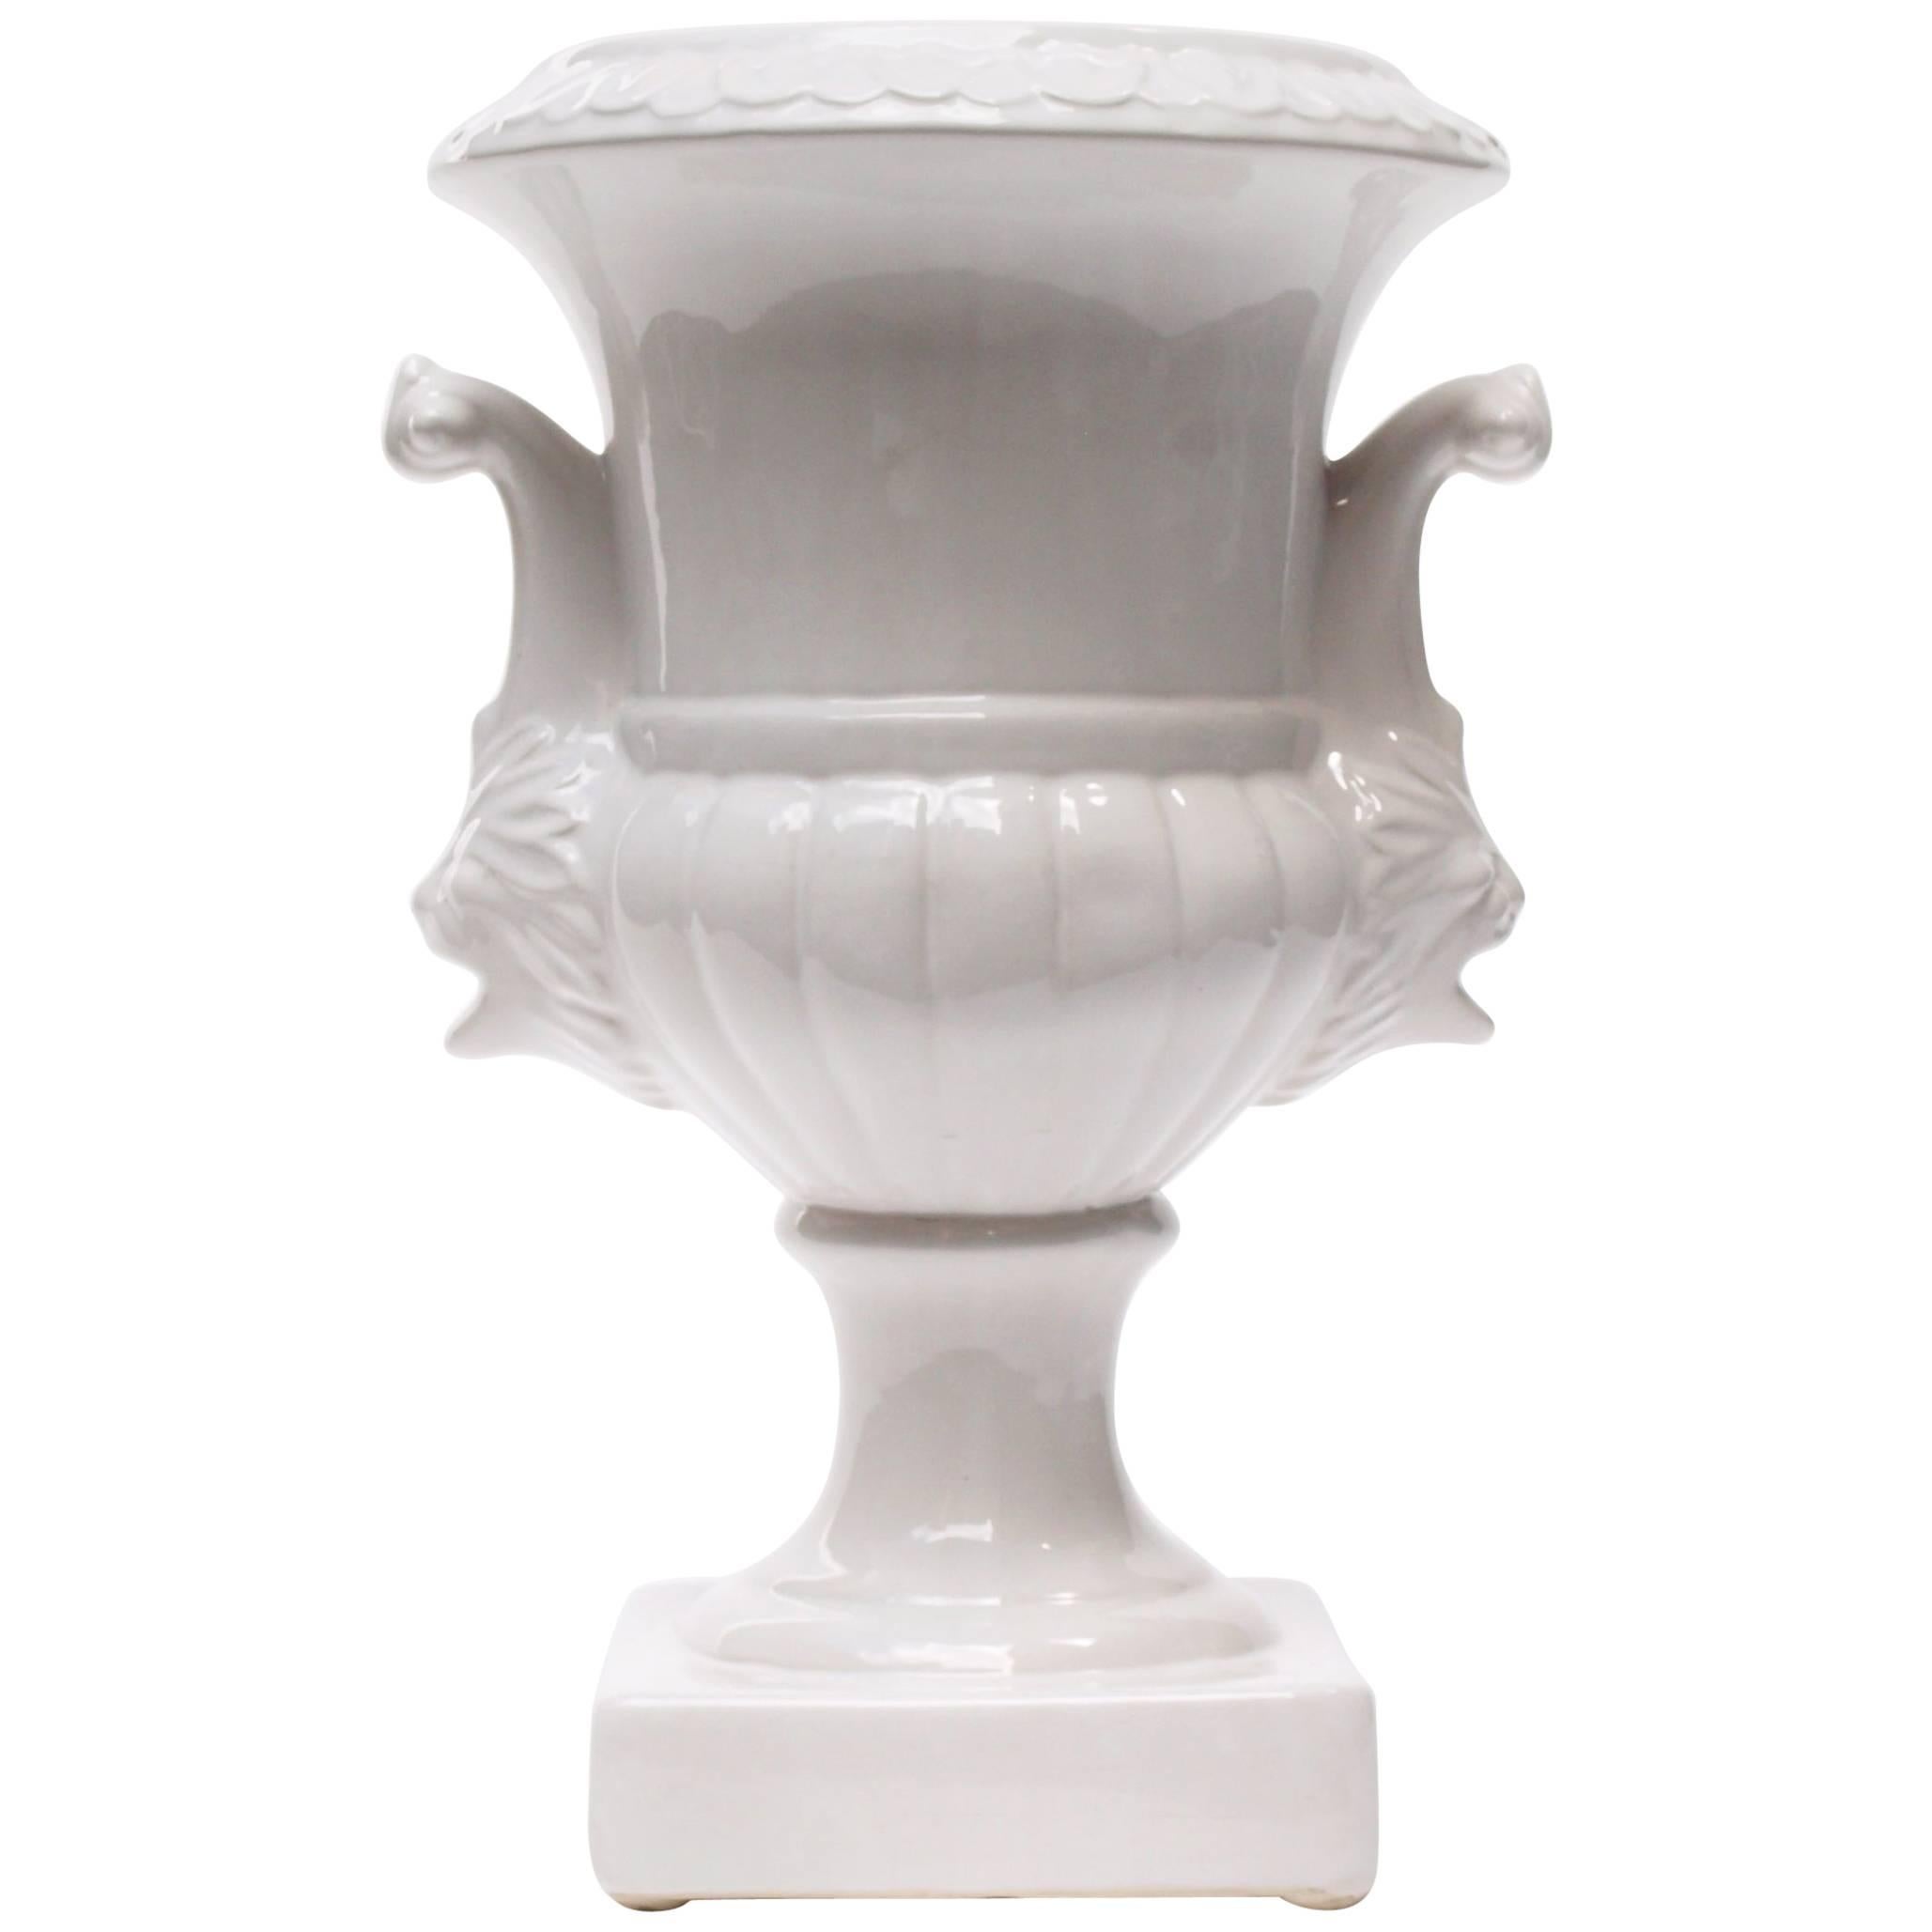 Large Classical White Glazed Ceramic Urn